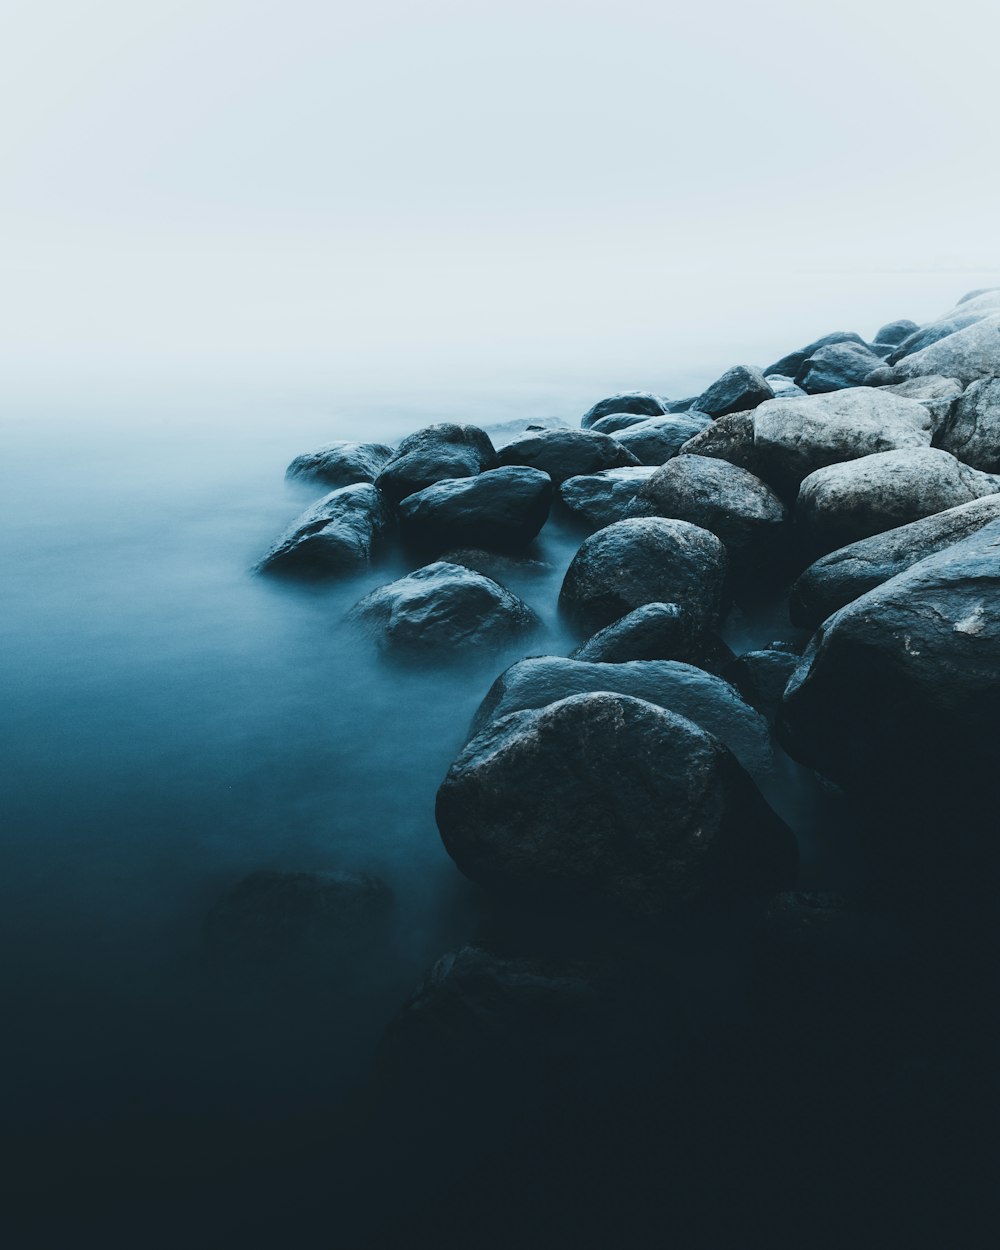 rochas perto do corpo de água